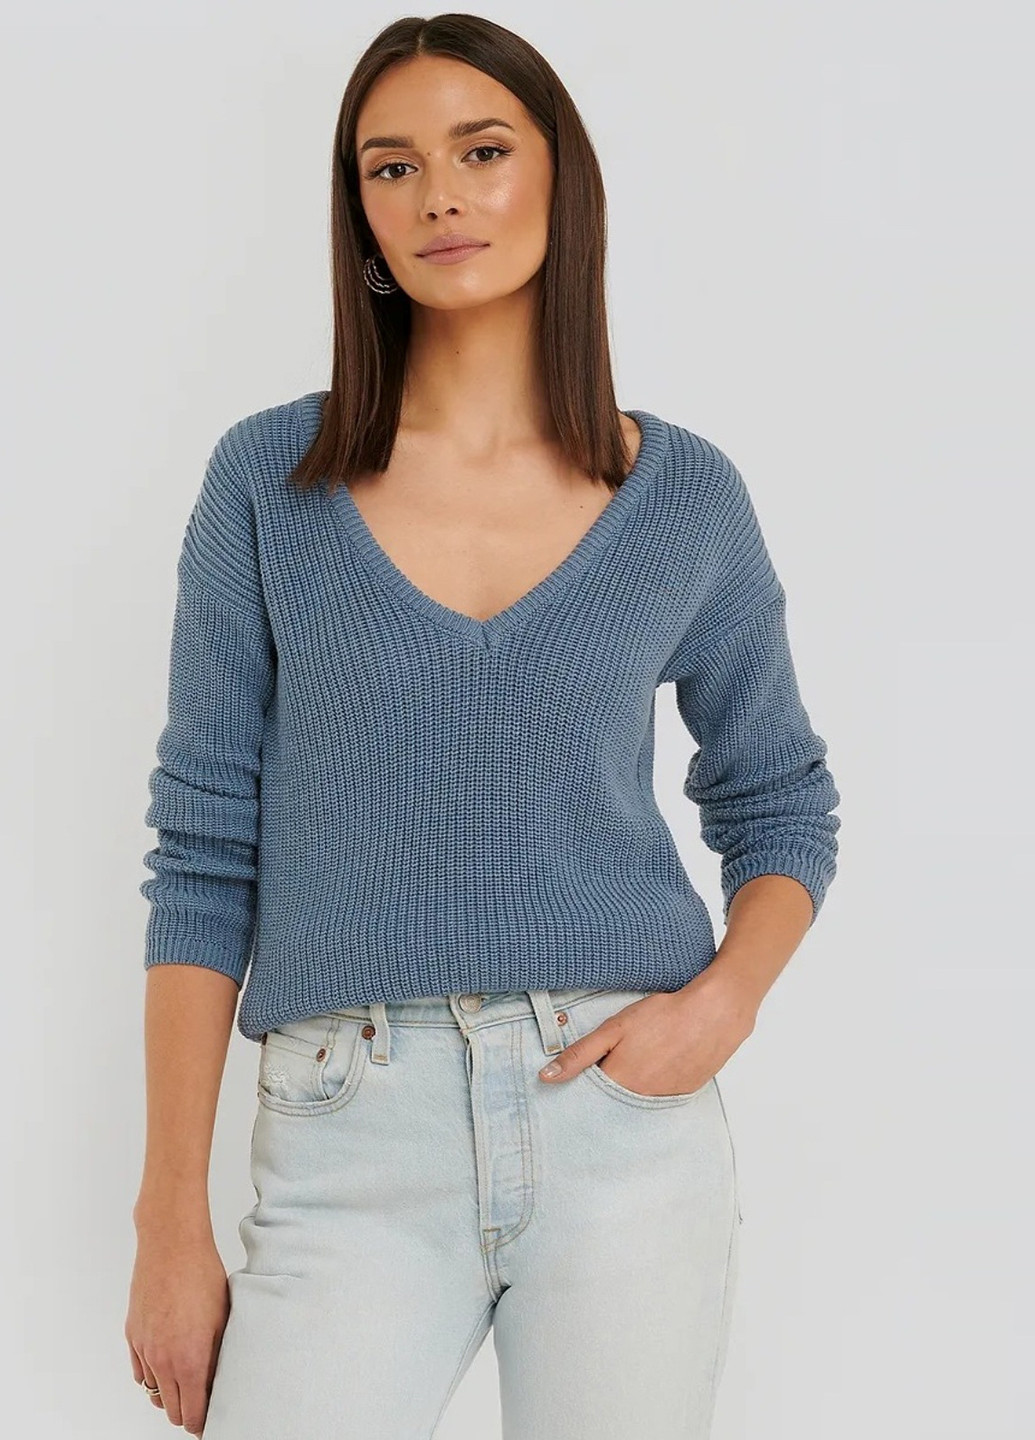 Серо-синий демисезонный пуловер пуловер NA-KD